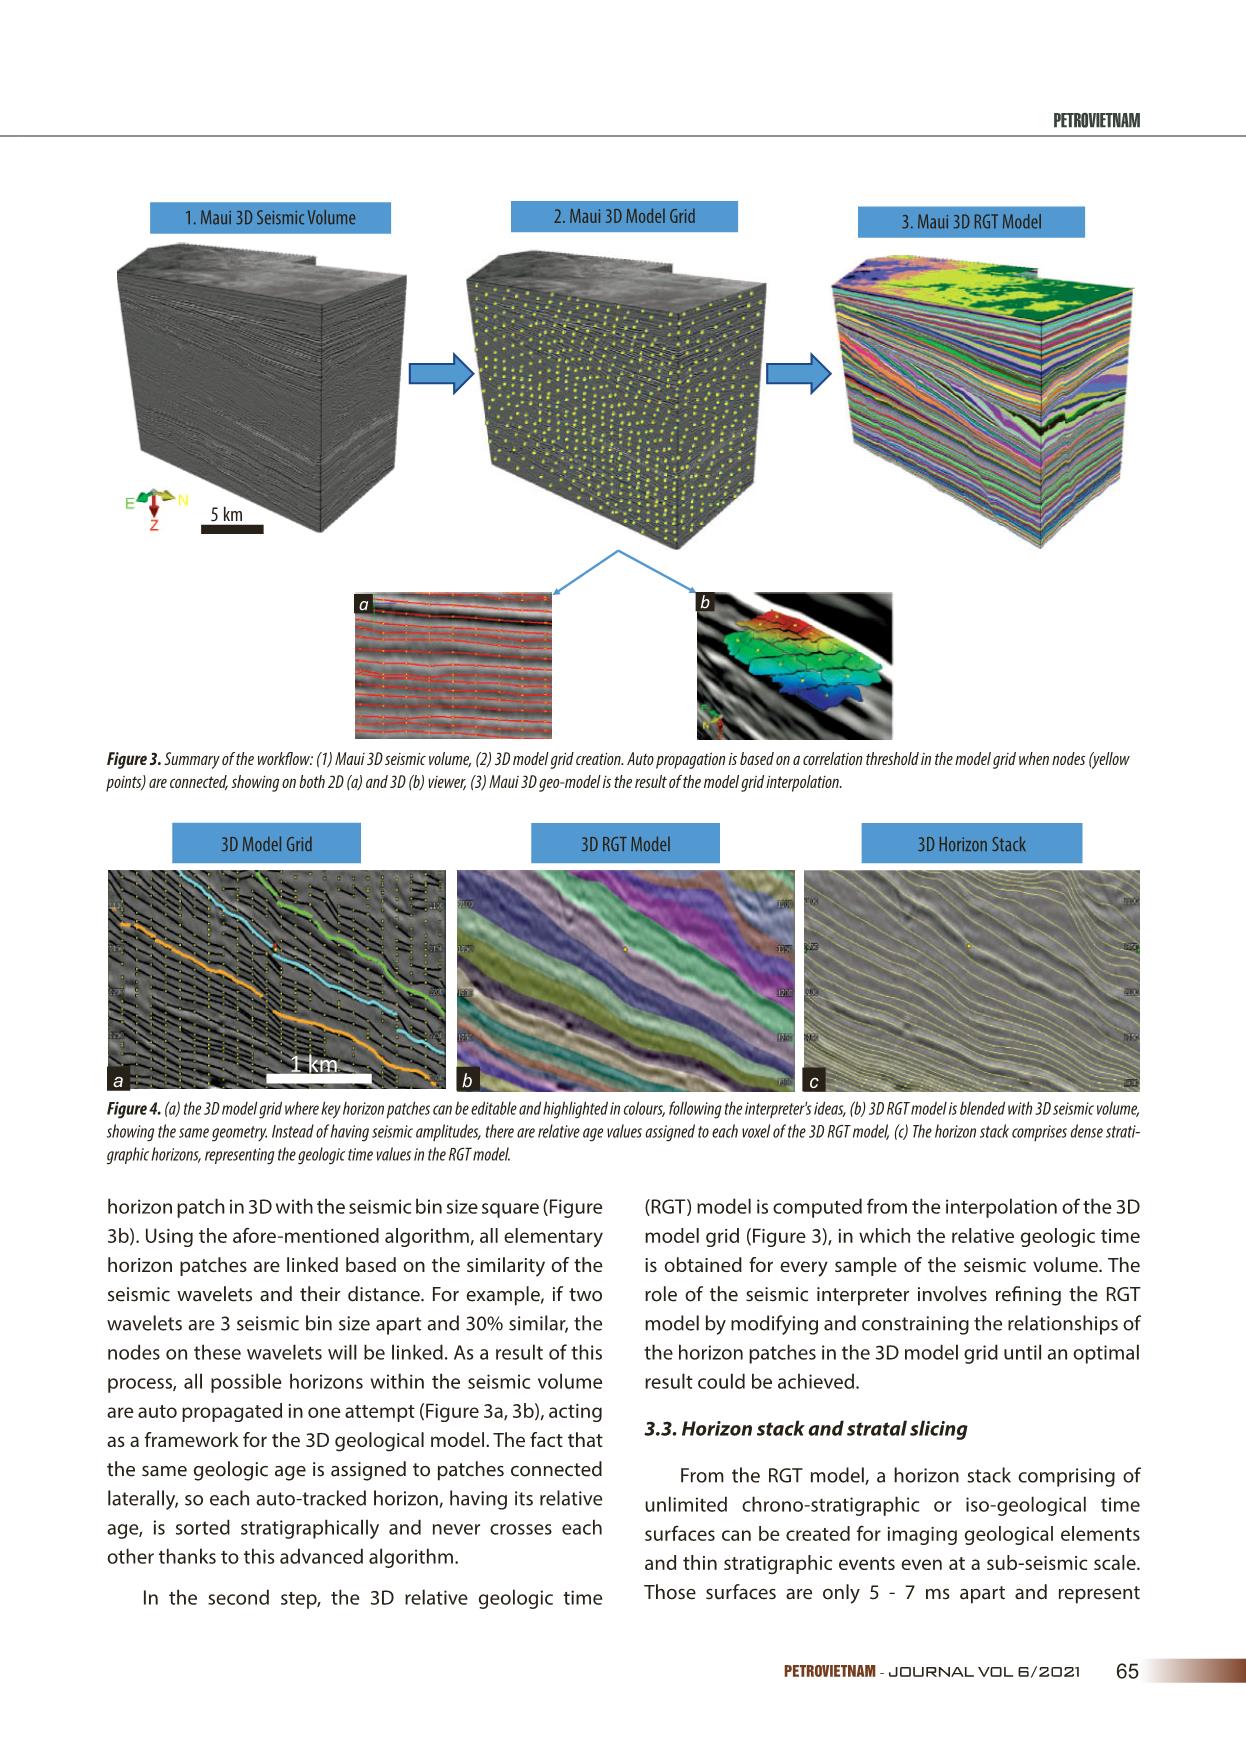 A breakthrough in 3D seismic interpretation trang 3